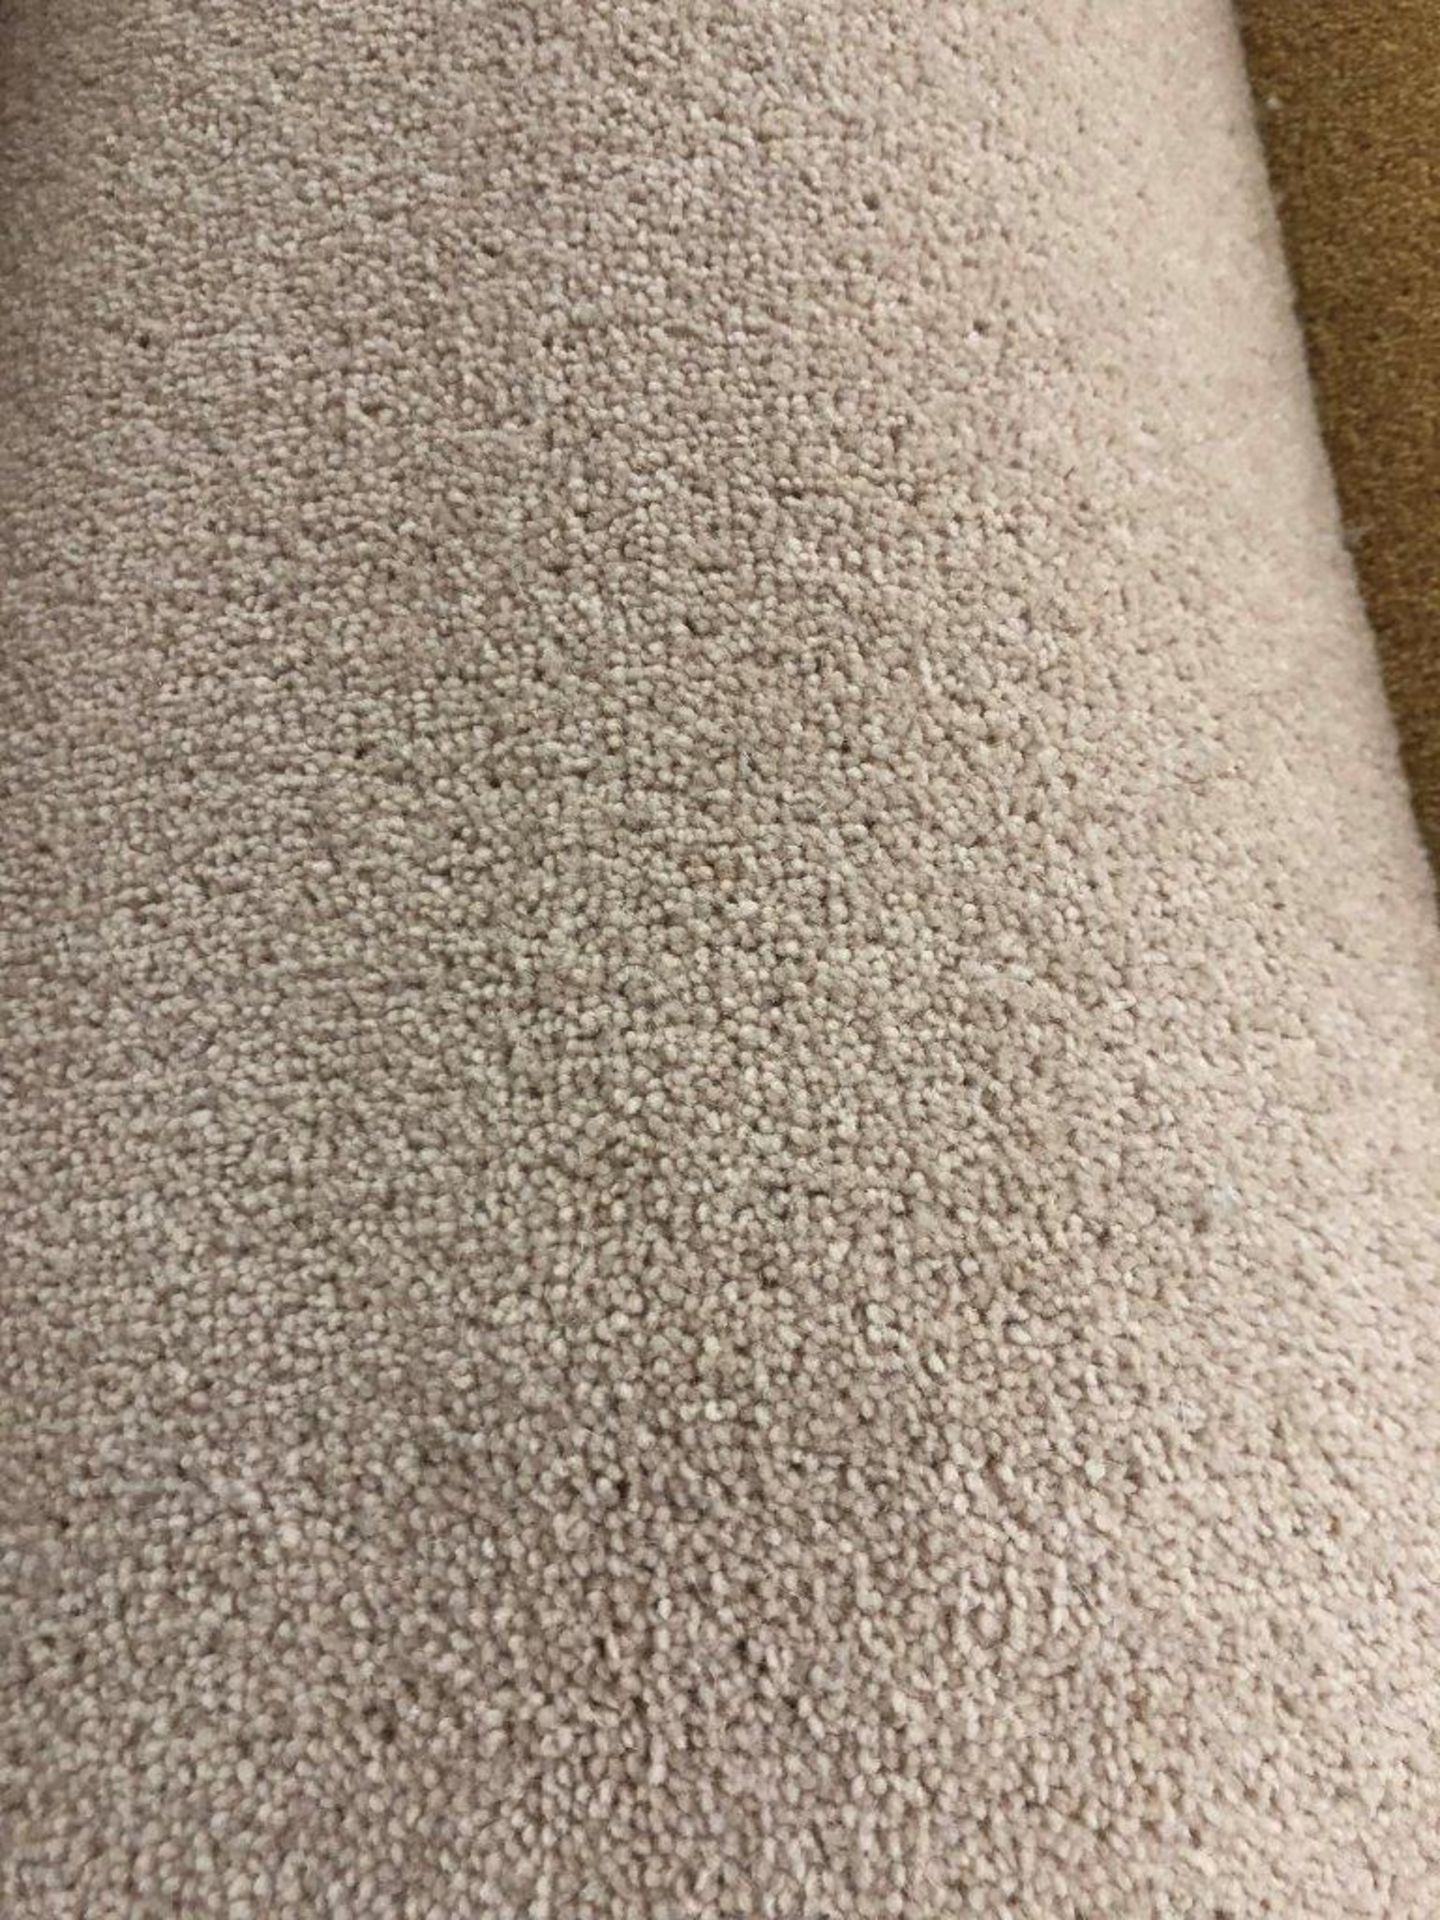 1 x Ryalux Carpet End Roll - Cream 4.0x3.0m2 - Image 3 of 3